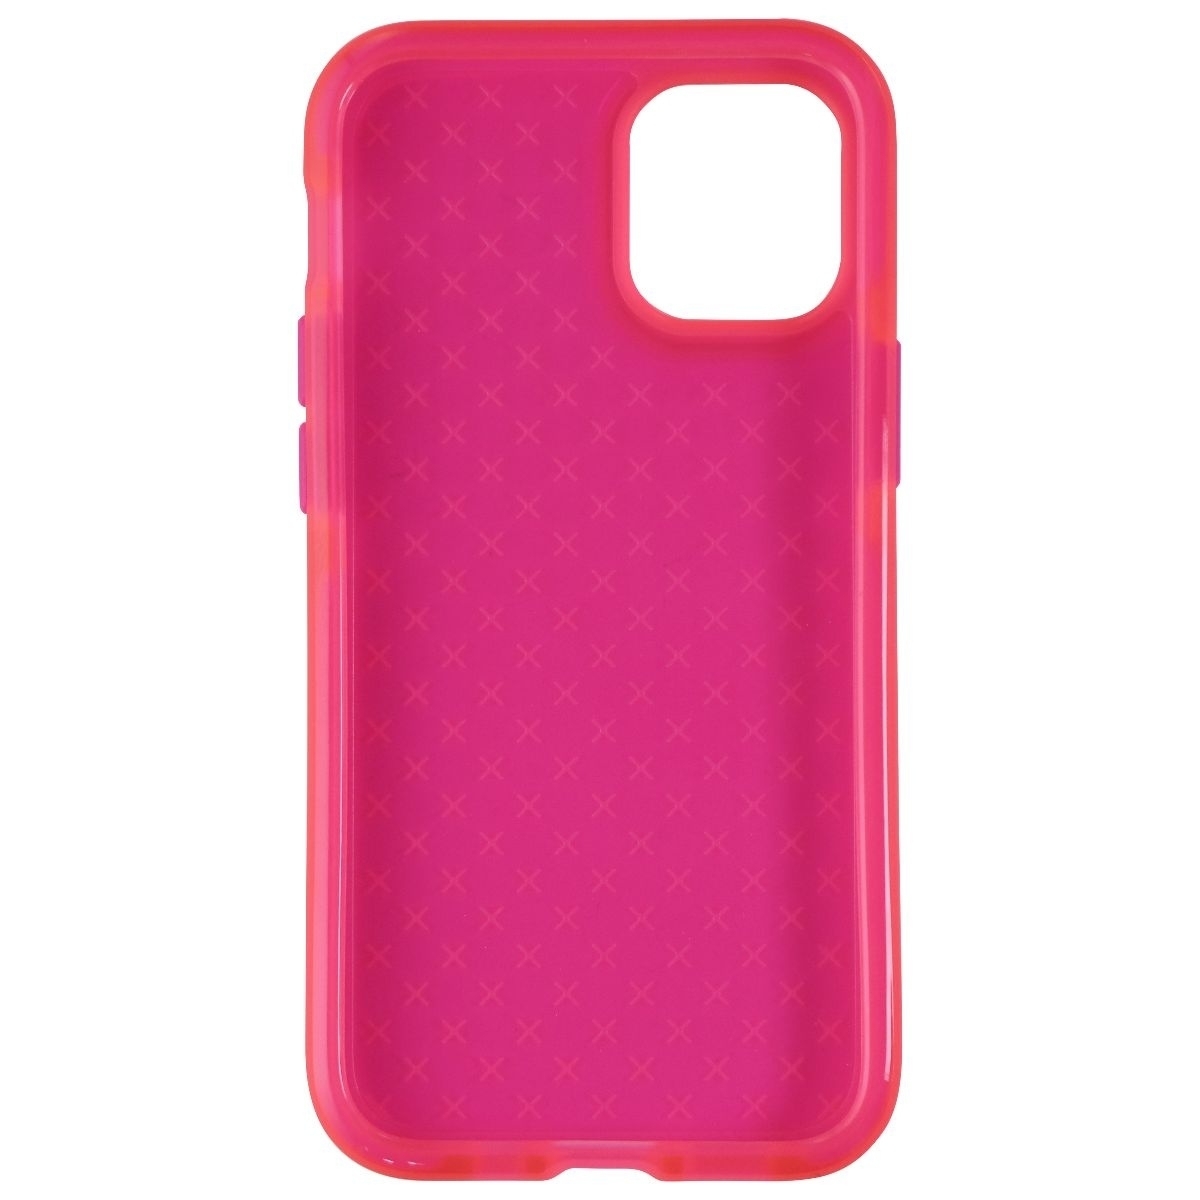 Tech21 Evo Check Series Flexible Case For Apple IPhone 12 Mini - Pink